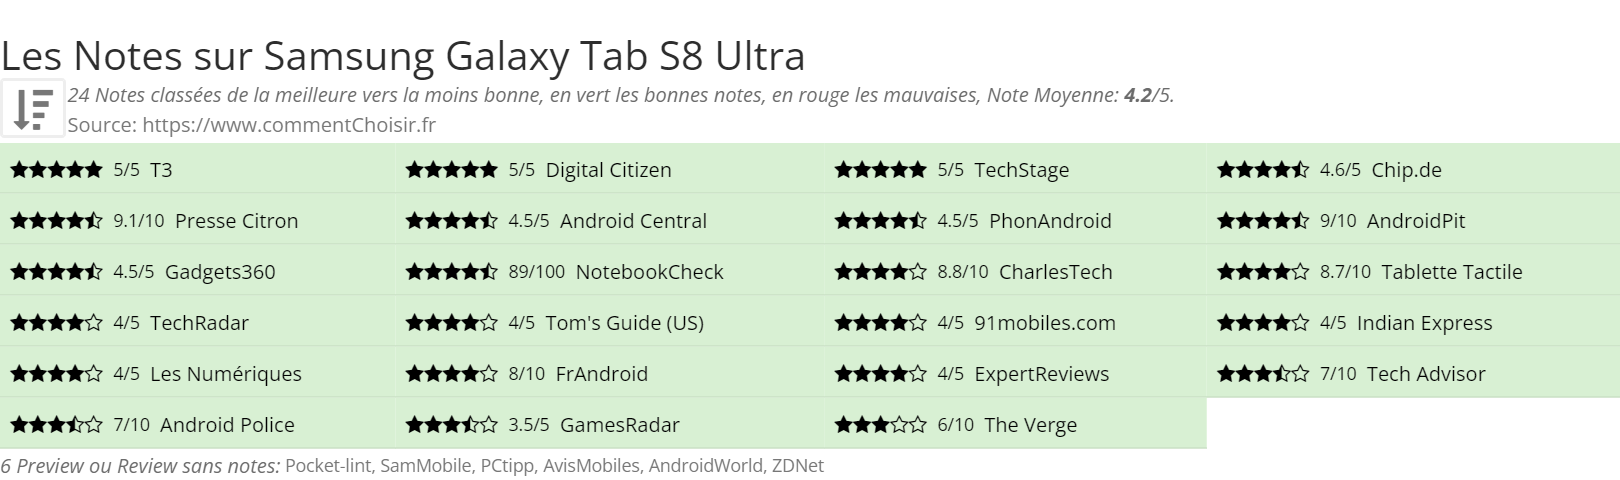 Ratings Samsung Galaxy Tab S8 Ultra